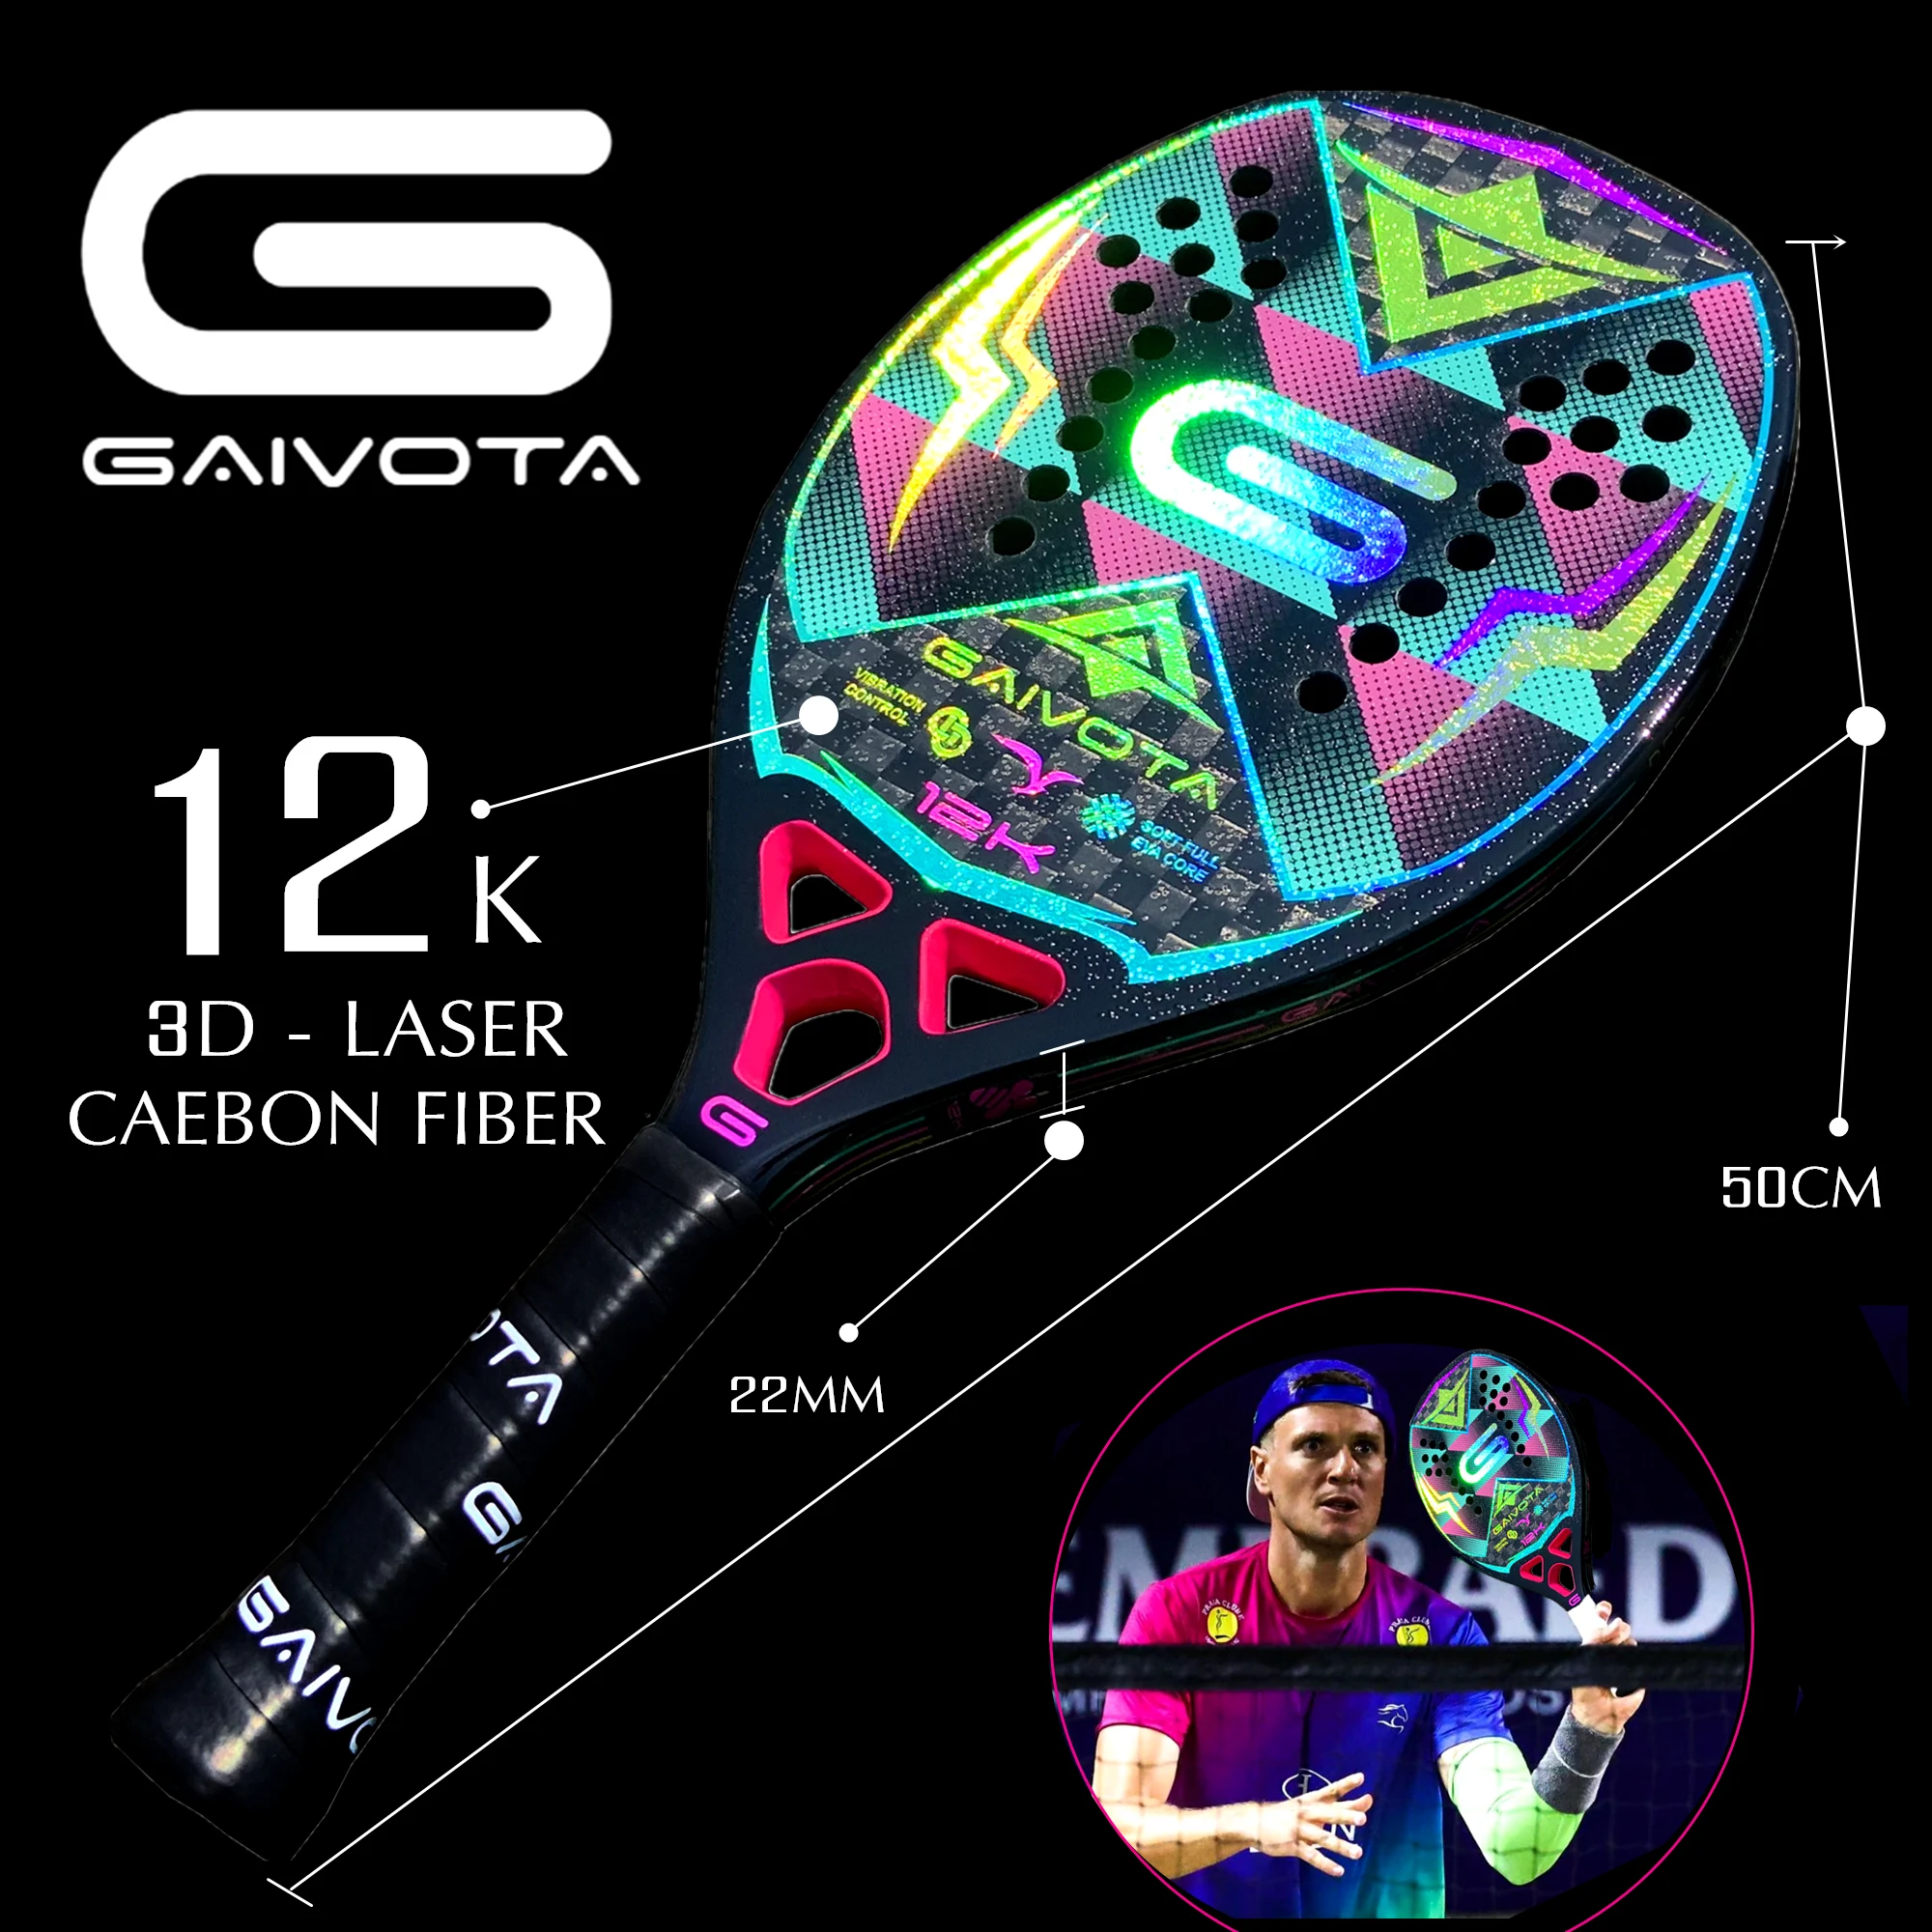 MINGHE 12K carbon fiber beach racket limited edition high-end racket with laser film 3D true color holographic technology-1pcs